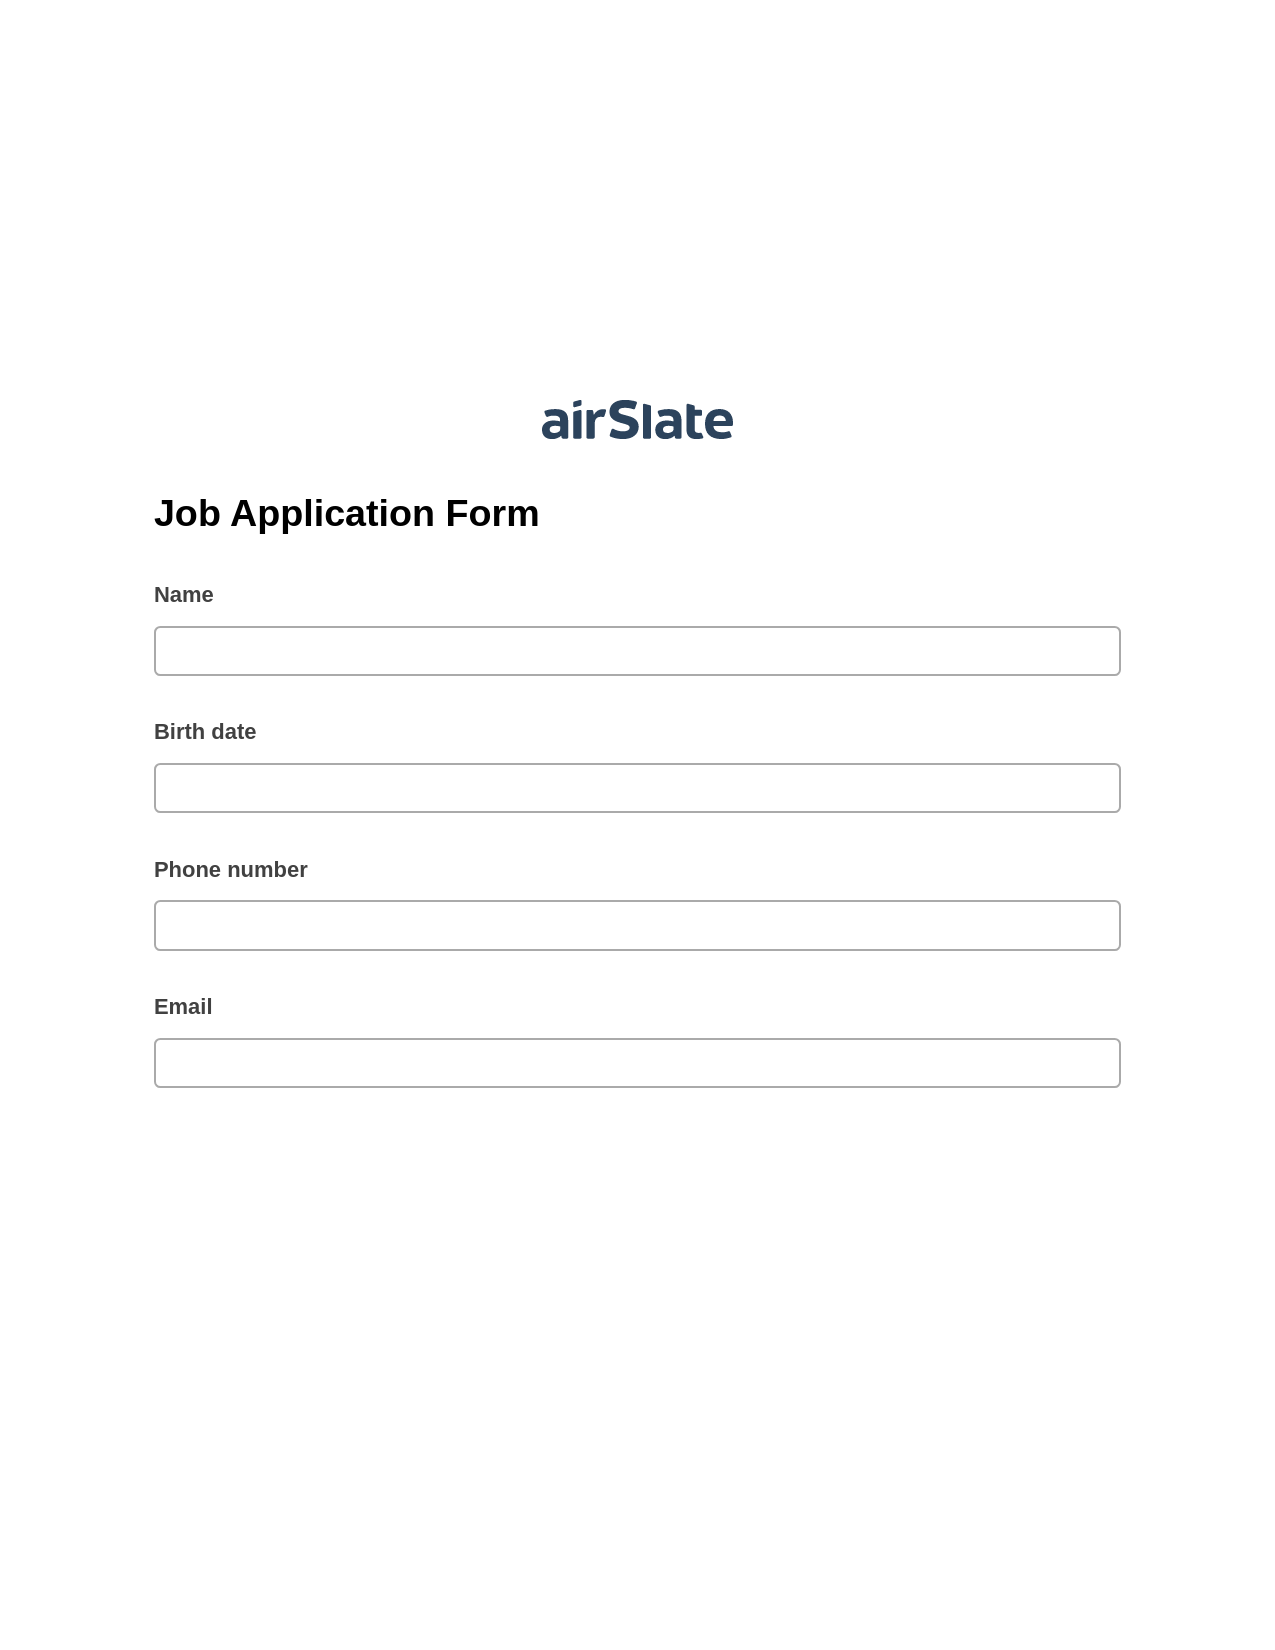 Job Application Form Pre-fill from CSV File Dropdown Options Bot, Create slate bot, Slack Two-Way Binding Bot